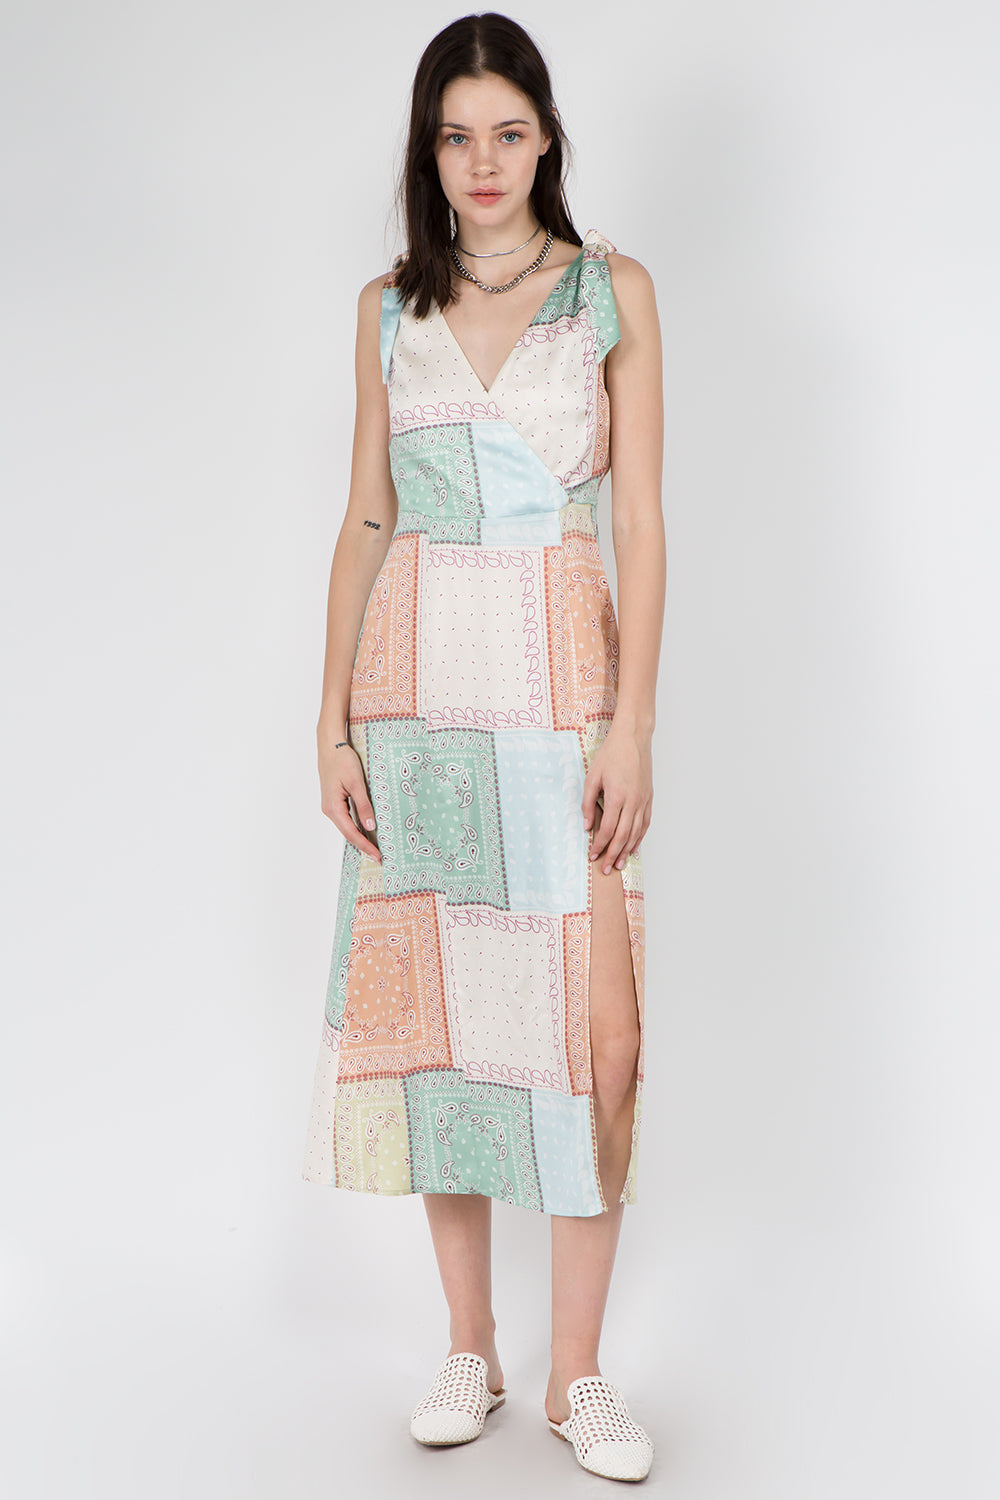 Patch Print Tie Dress - Whiteroom+Cactus